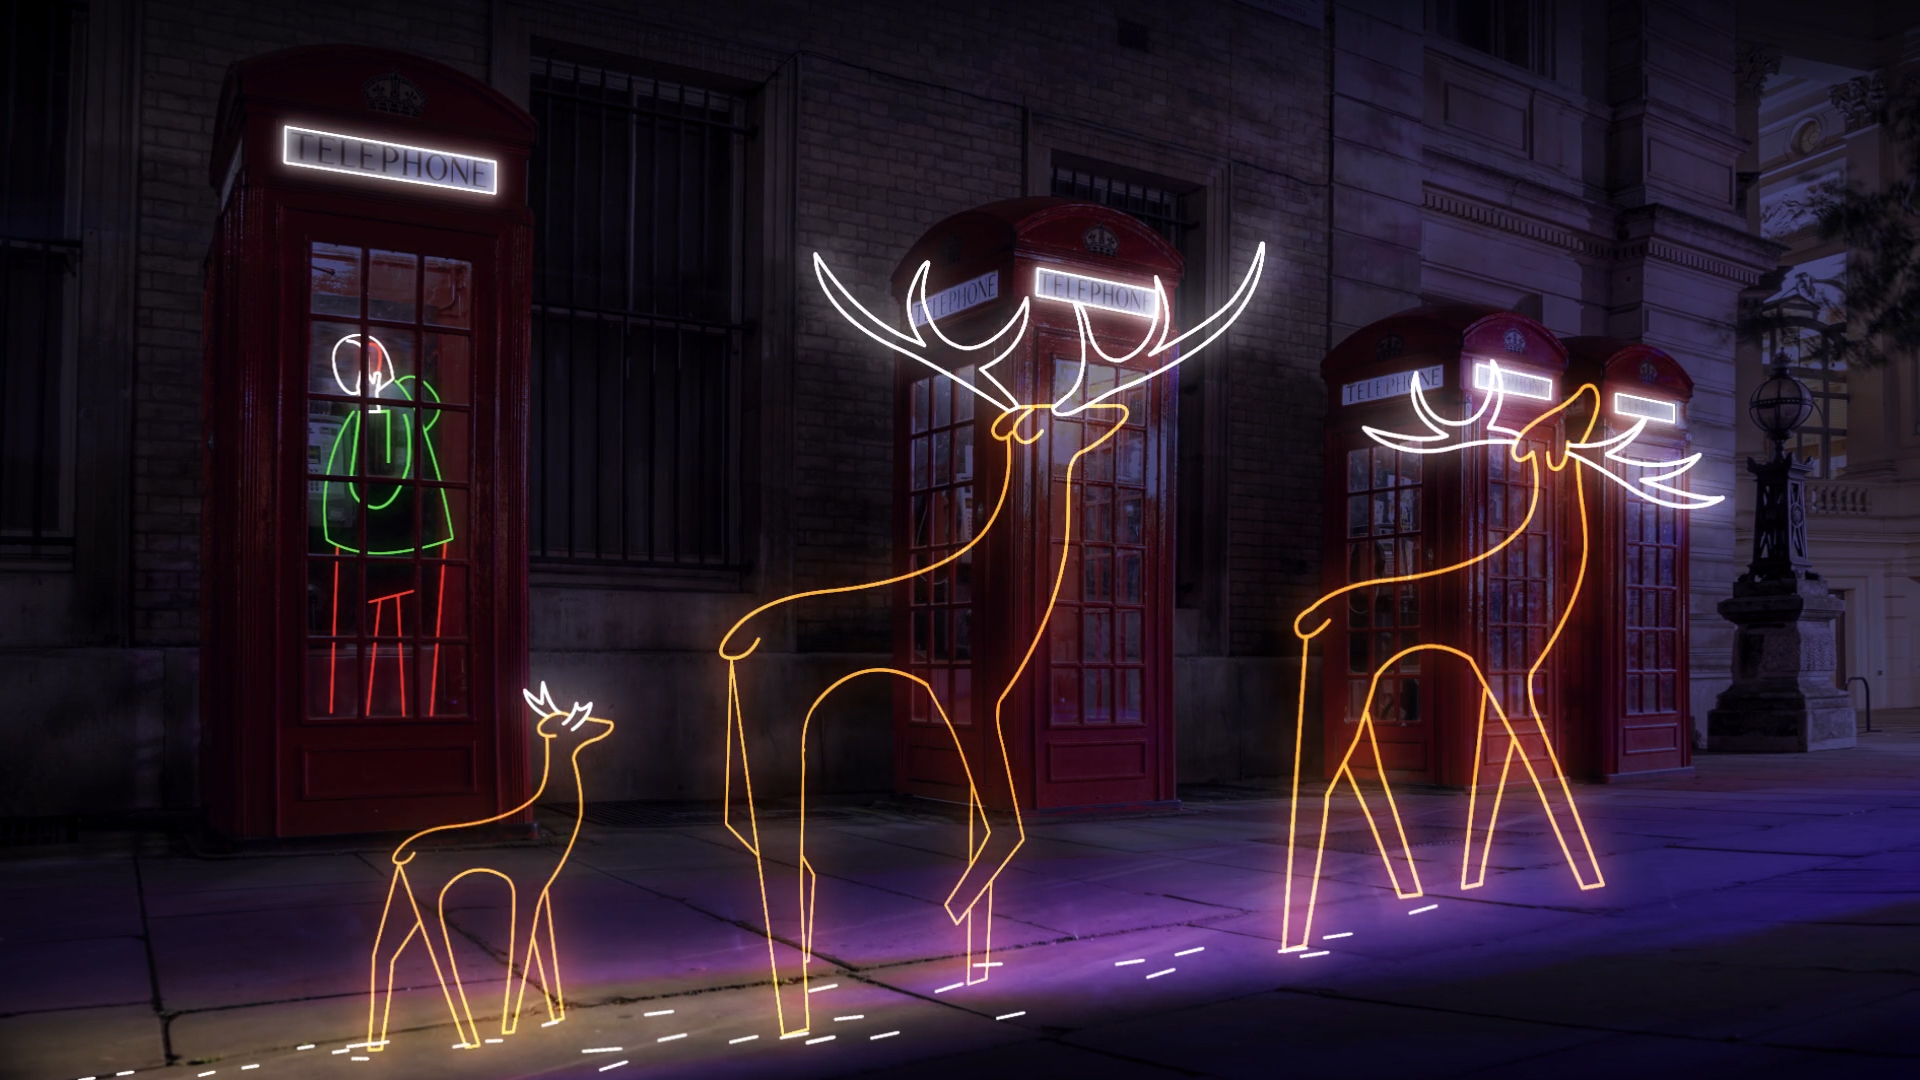 Illusration of neon reindeers in london street